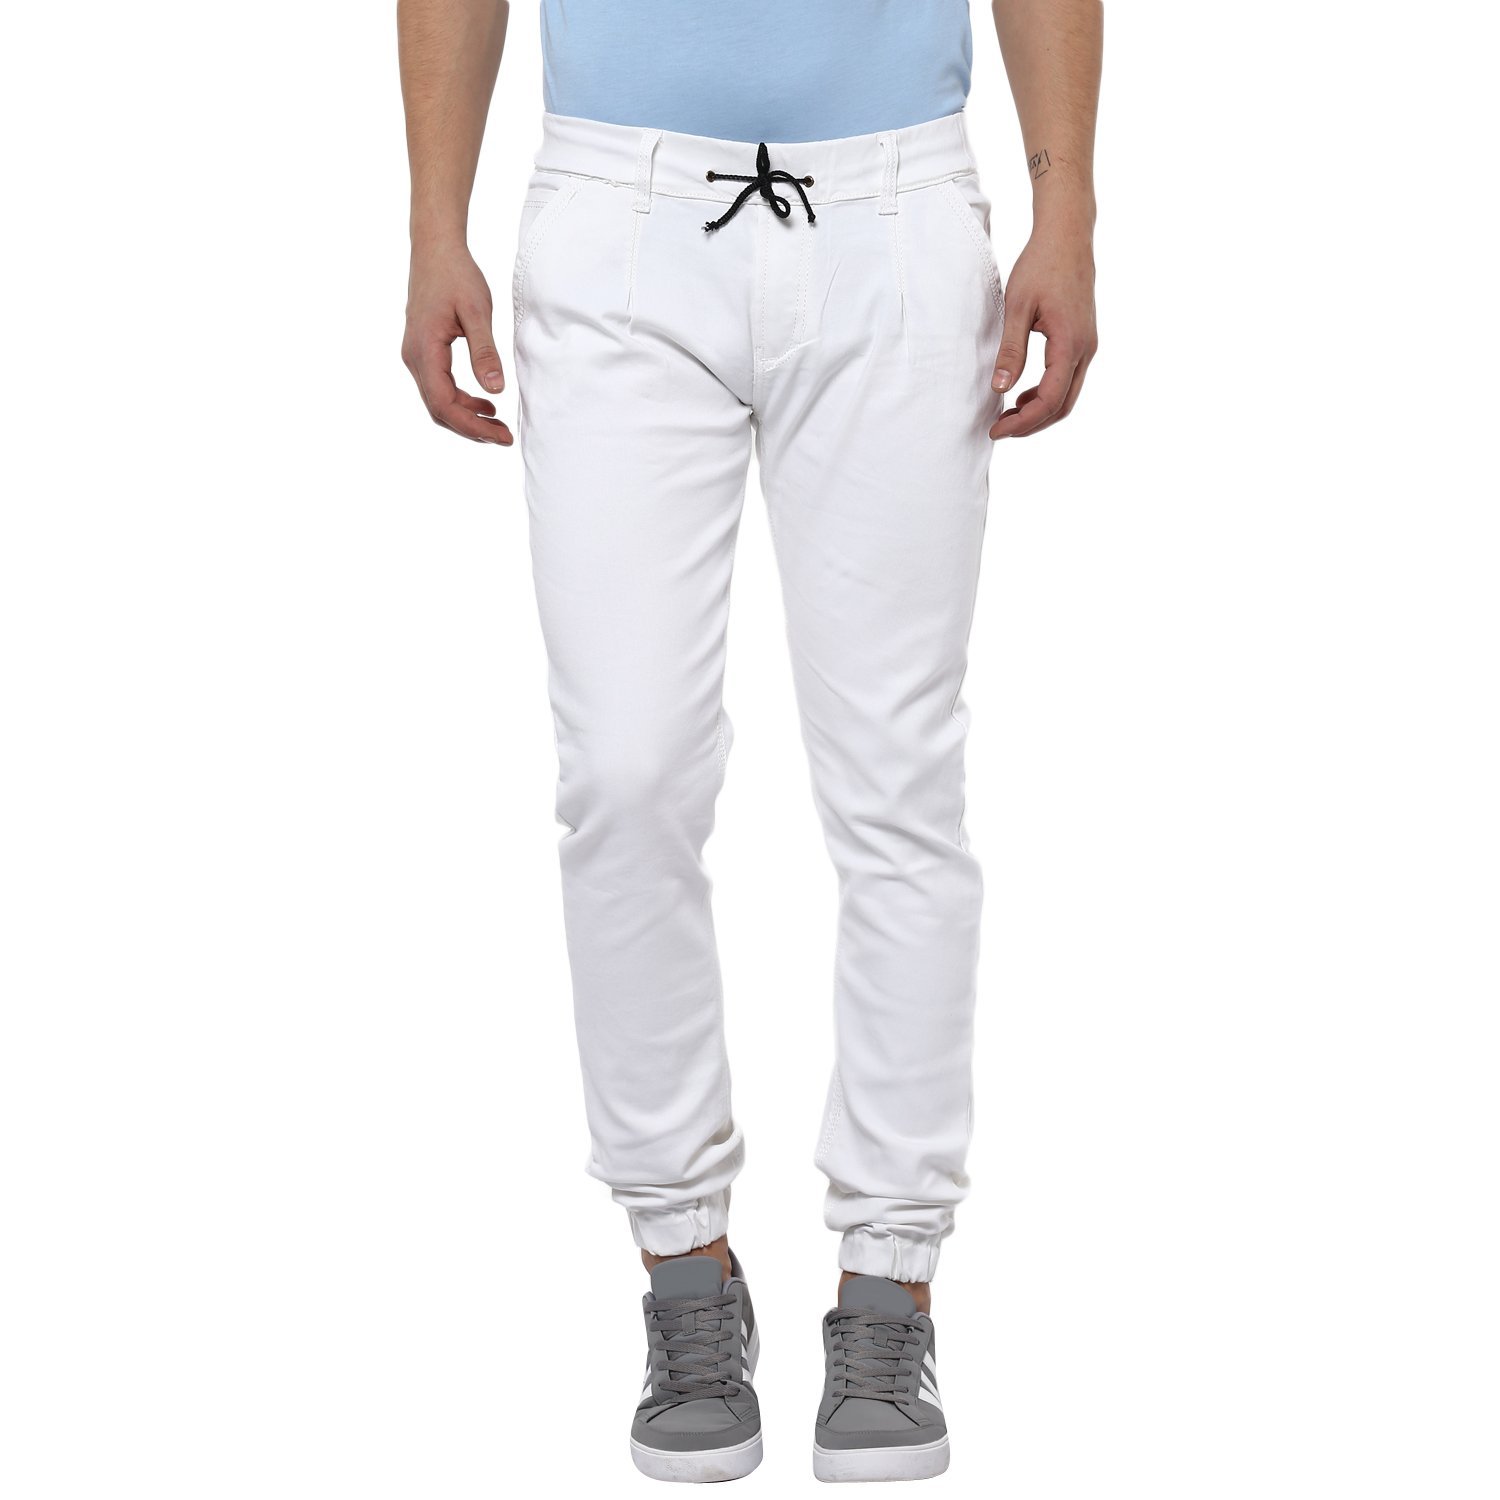 white jogger jeans mens